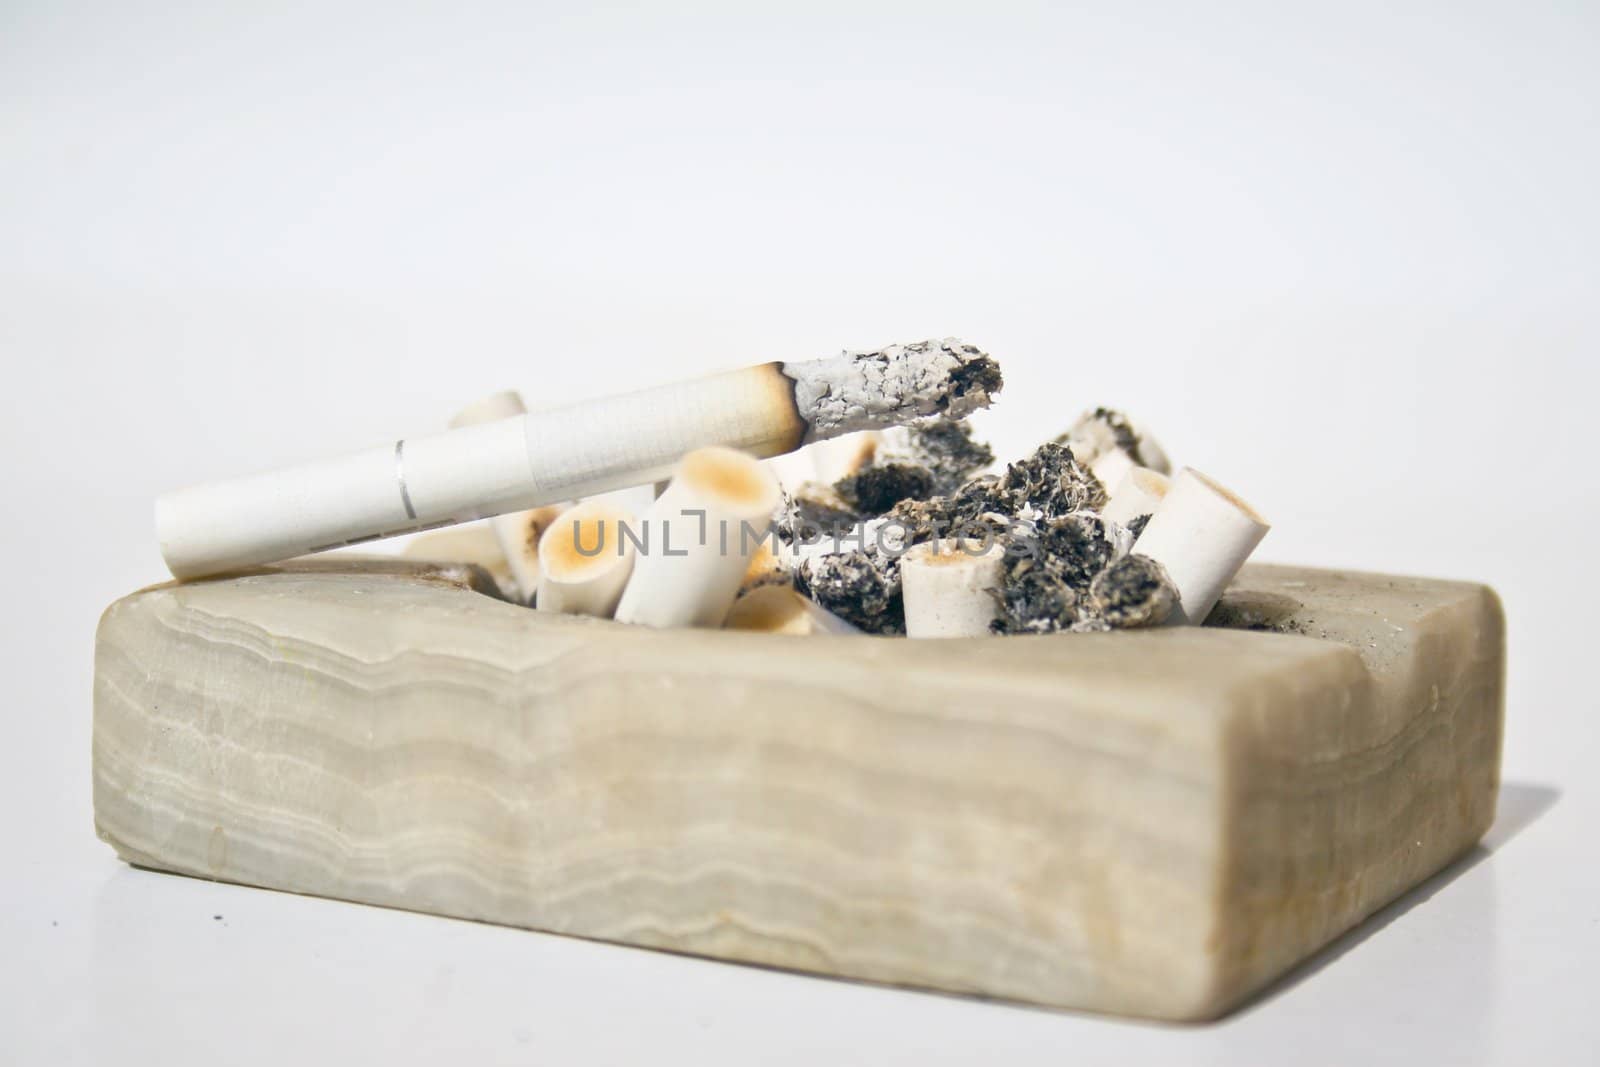 Full ashtray by timscottrom